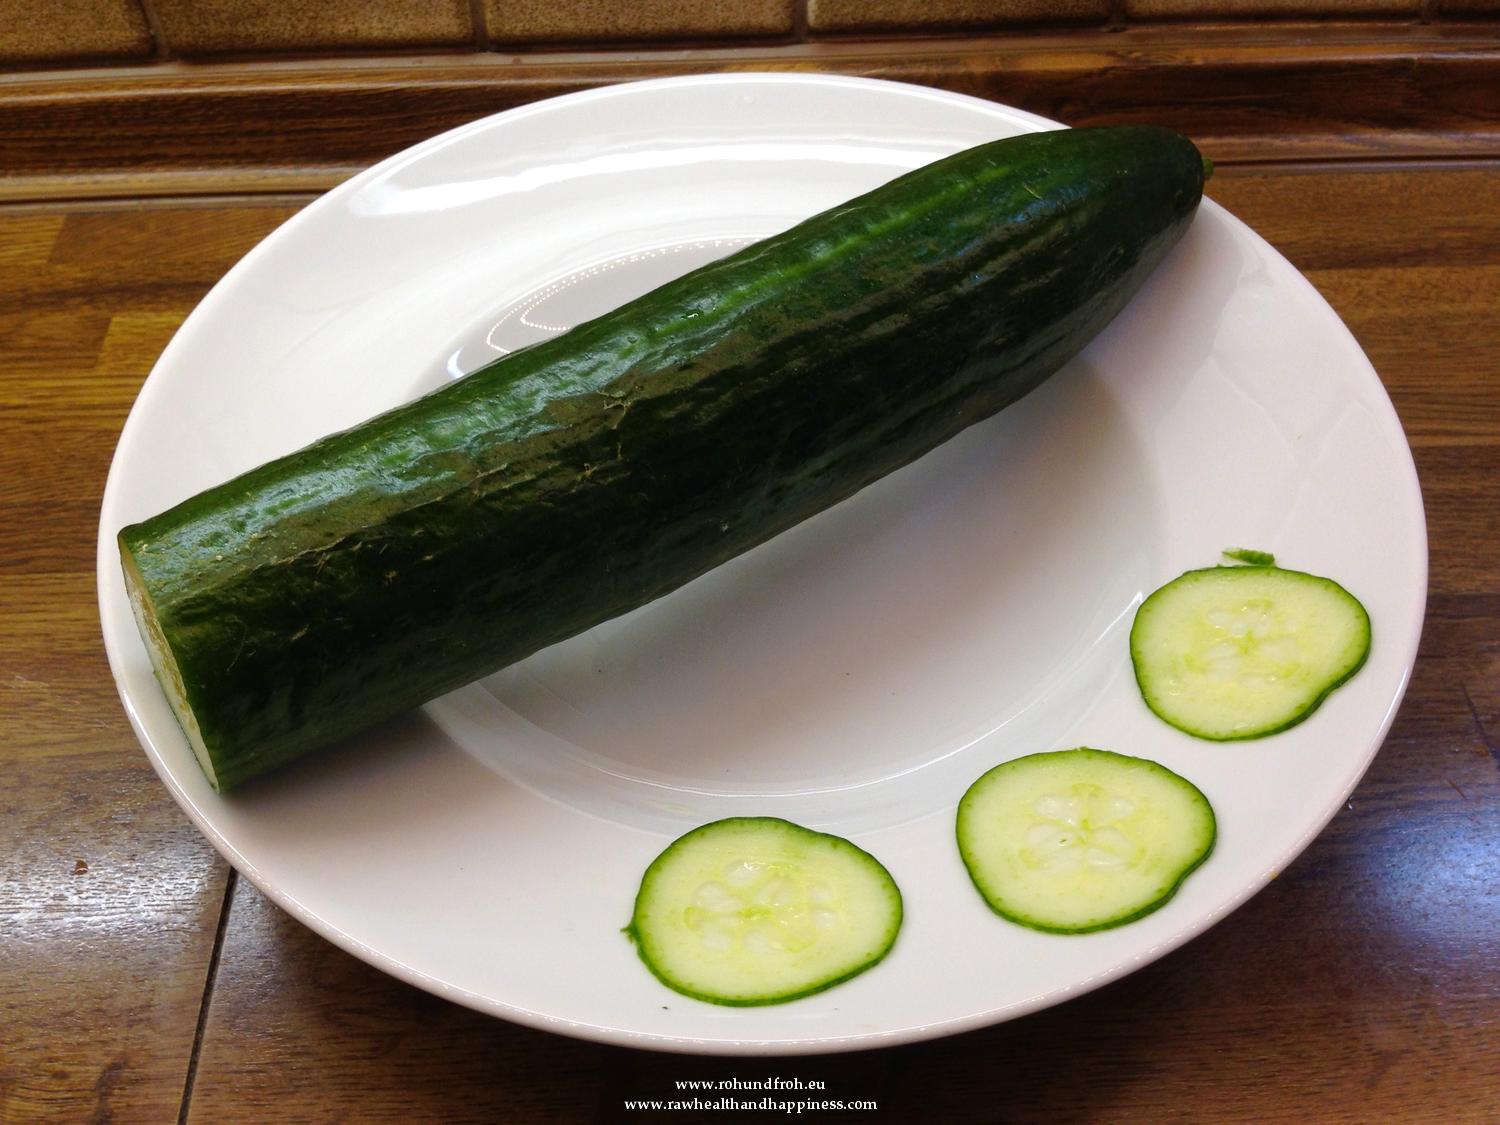 Spiral vegetable slicer - Wikipedia